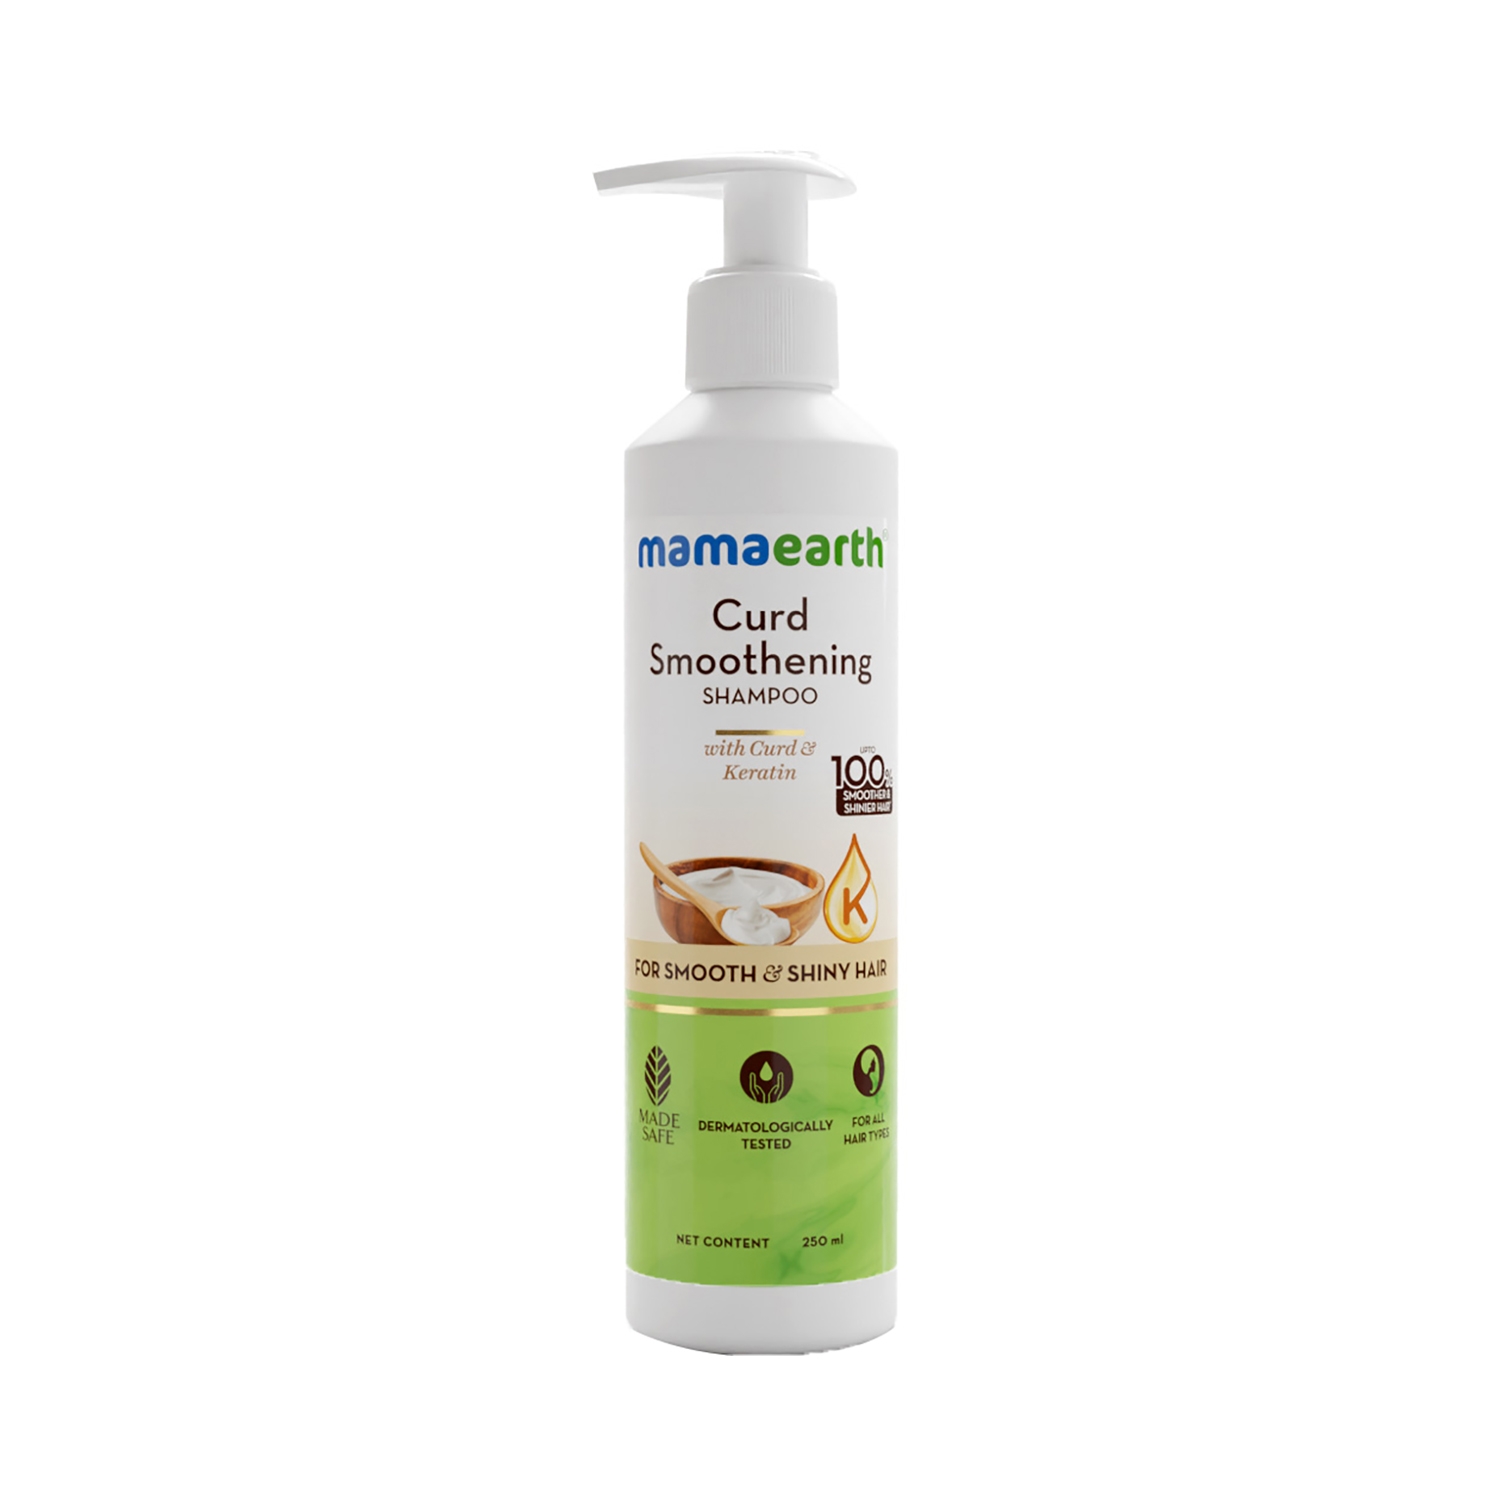 Mamaearth Curd Smoothening Shampoo (250ml)